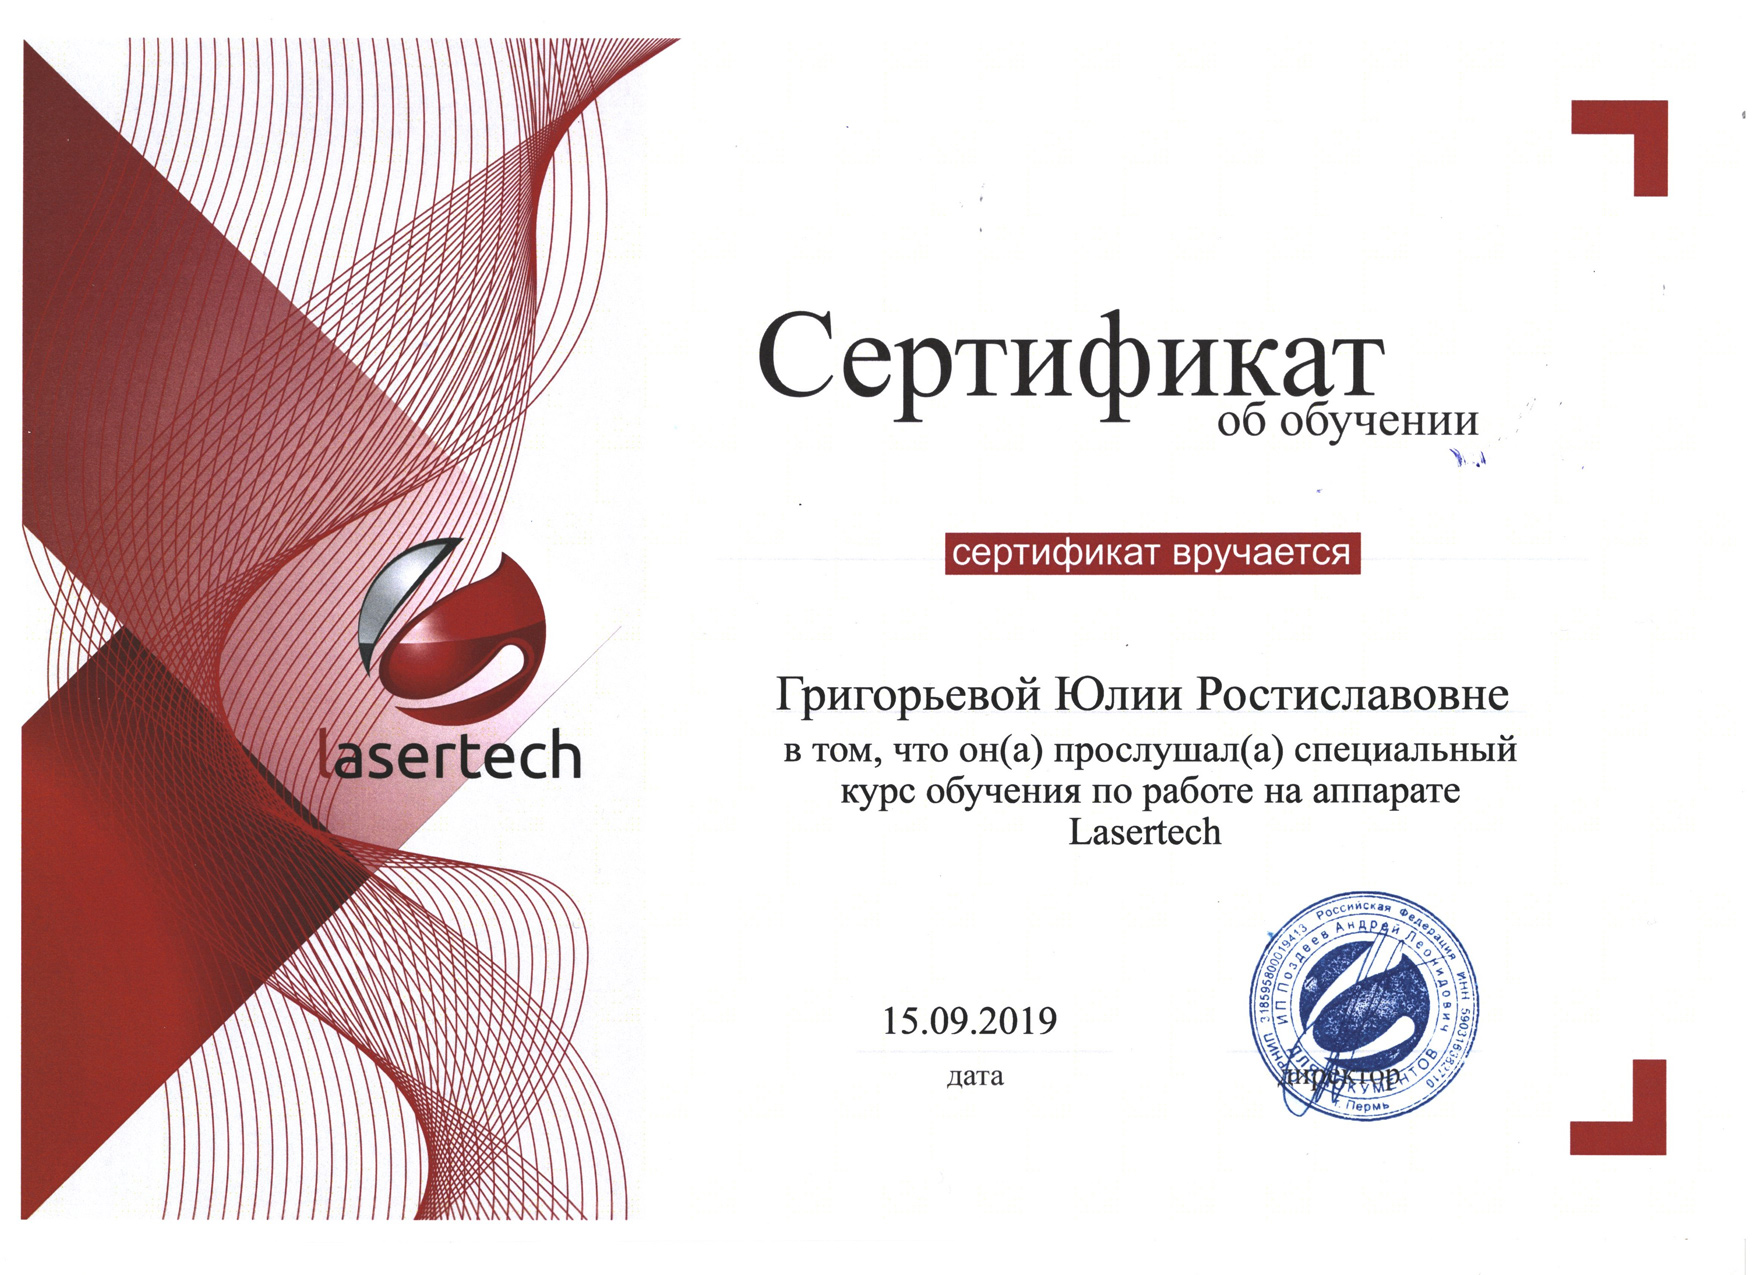 Сертификат — Курс обучения по работе на аппарате Lasertech. Григорьева Юлия Ростиславовна